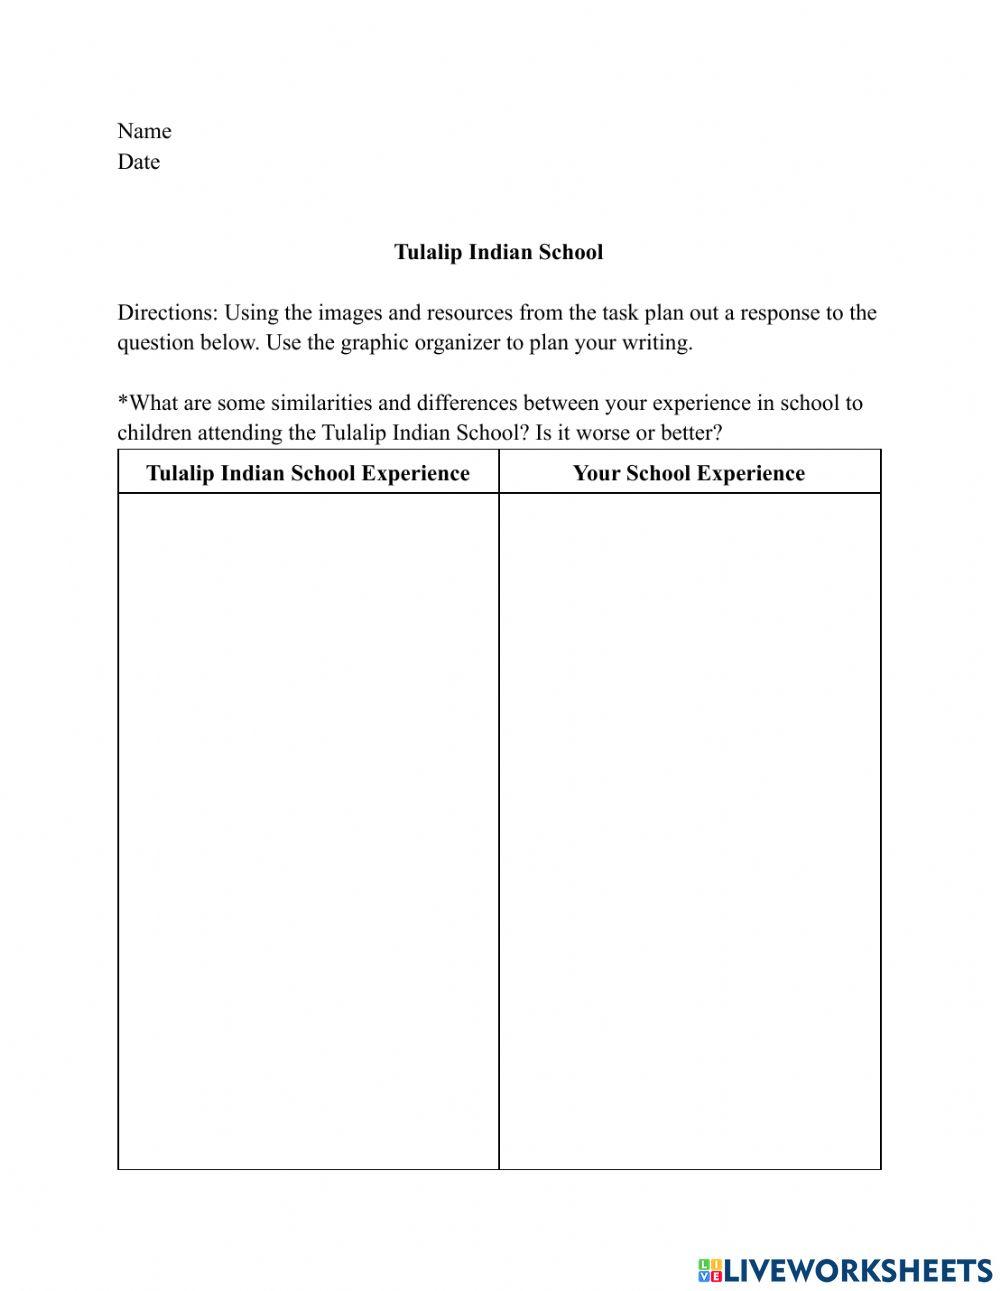 Tulalip Indian School Task Response